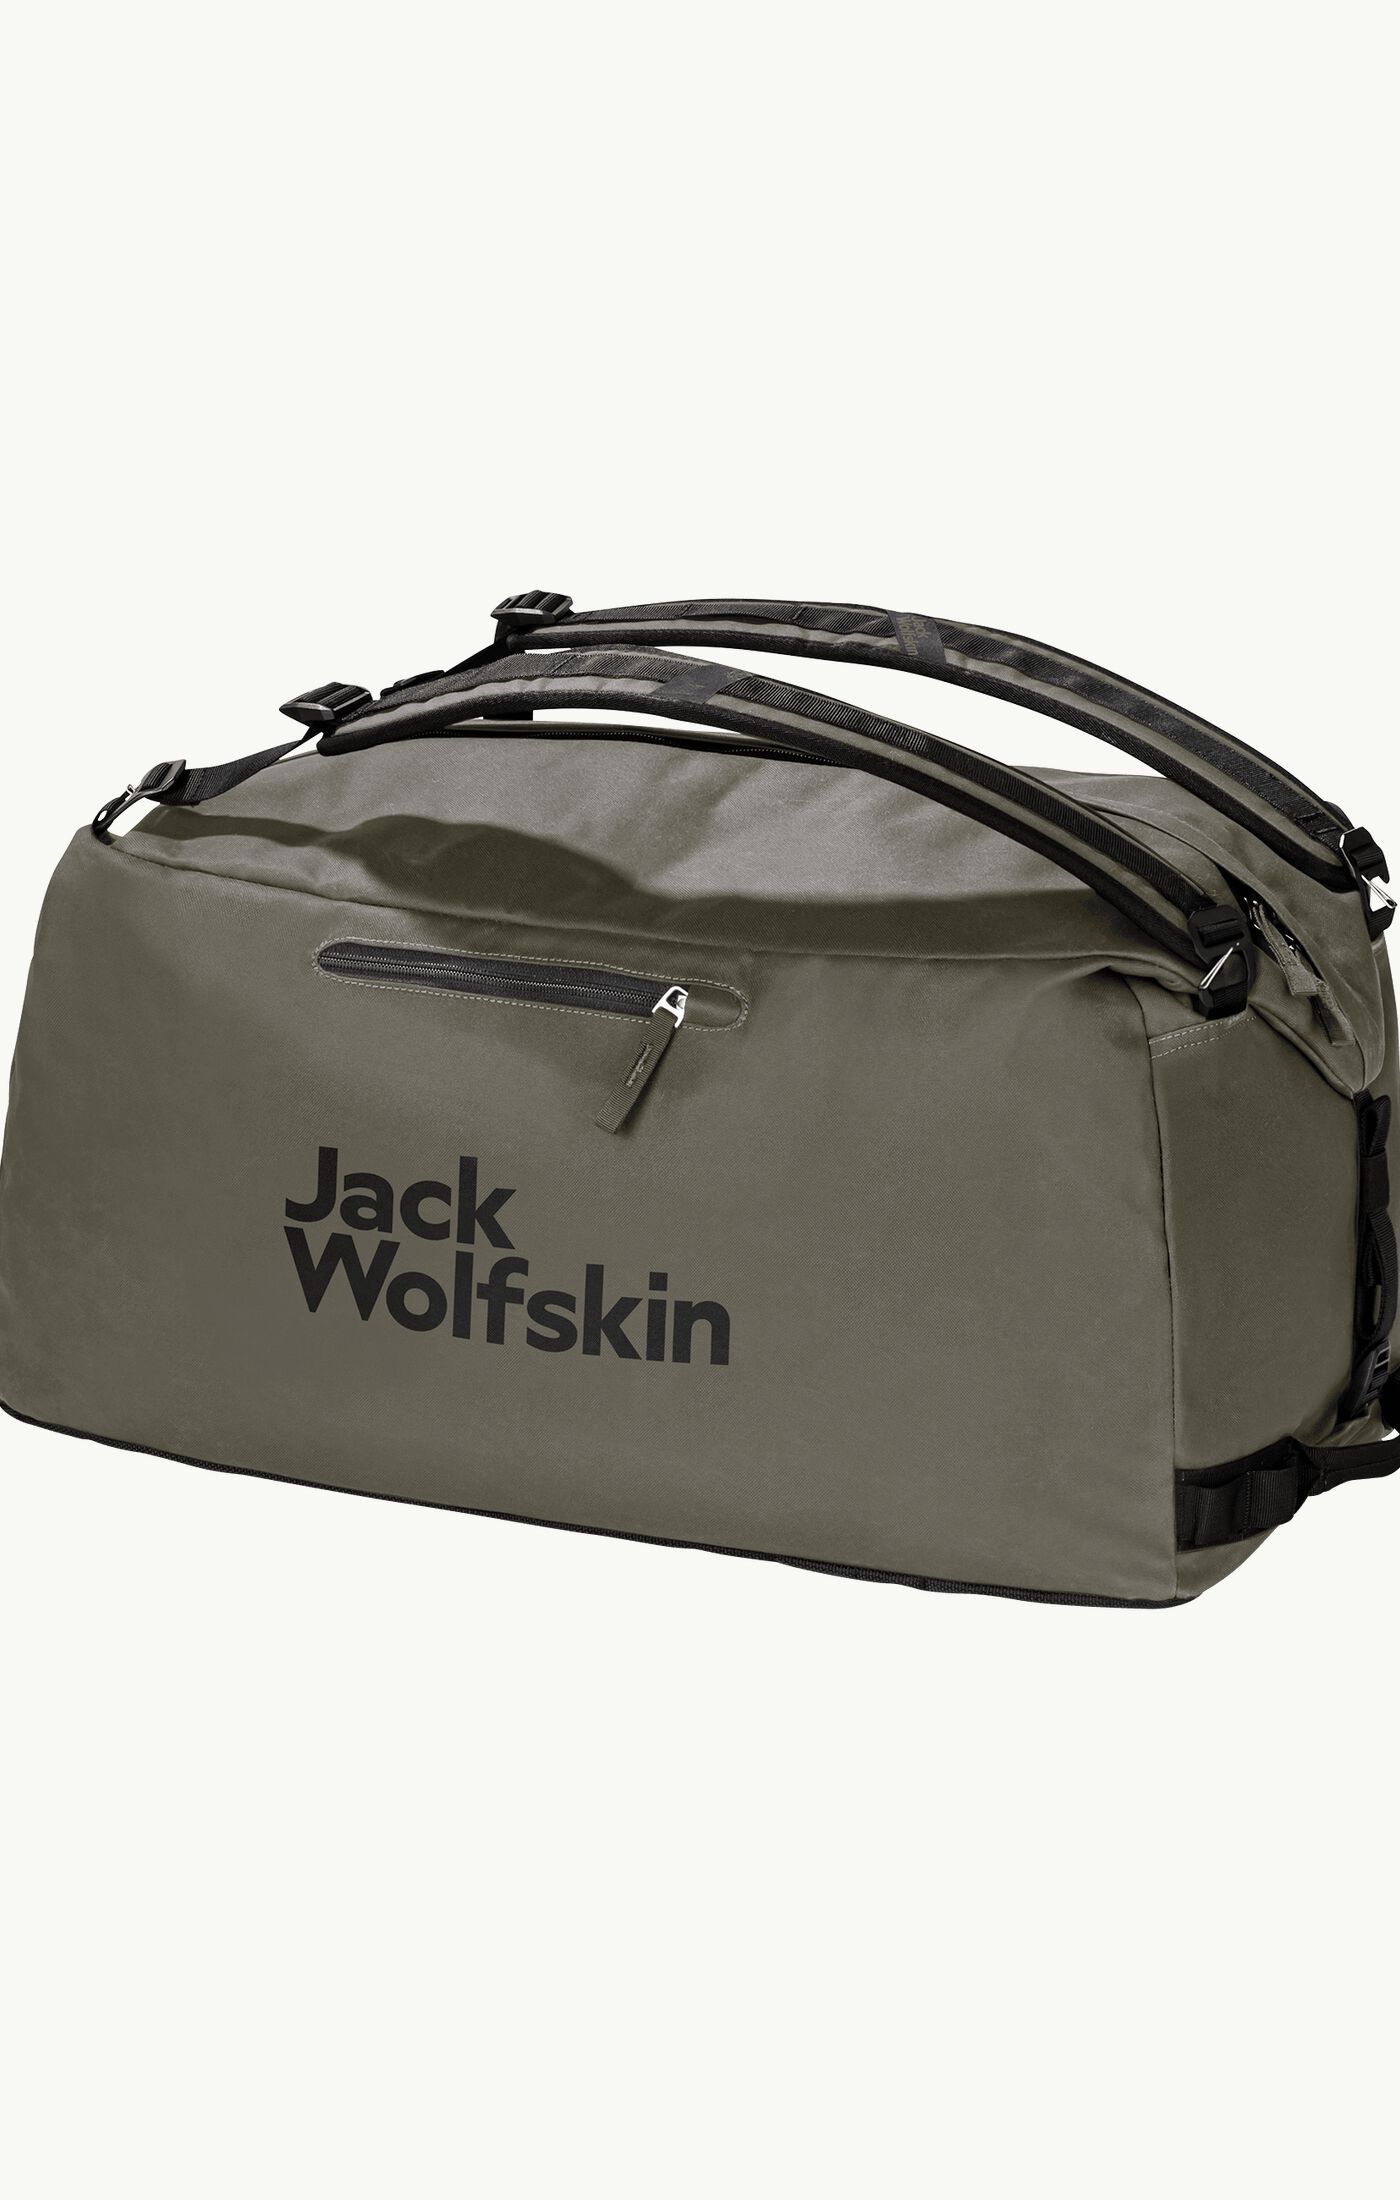 Jack Wolfskin Traveltopia Duffle 65 Dusty olive